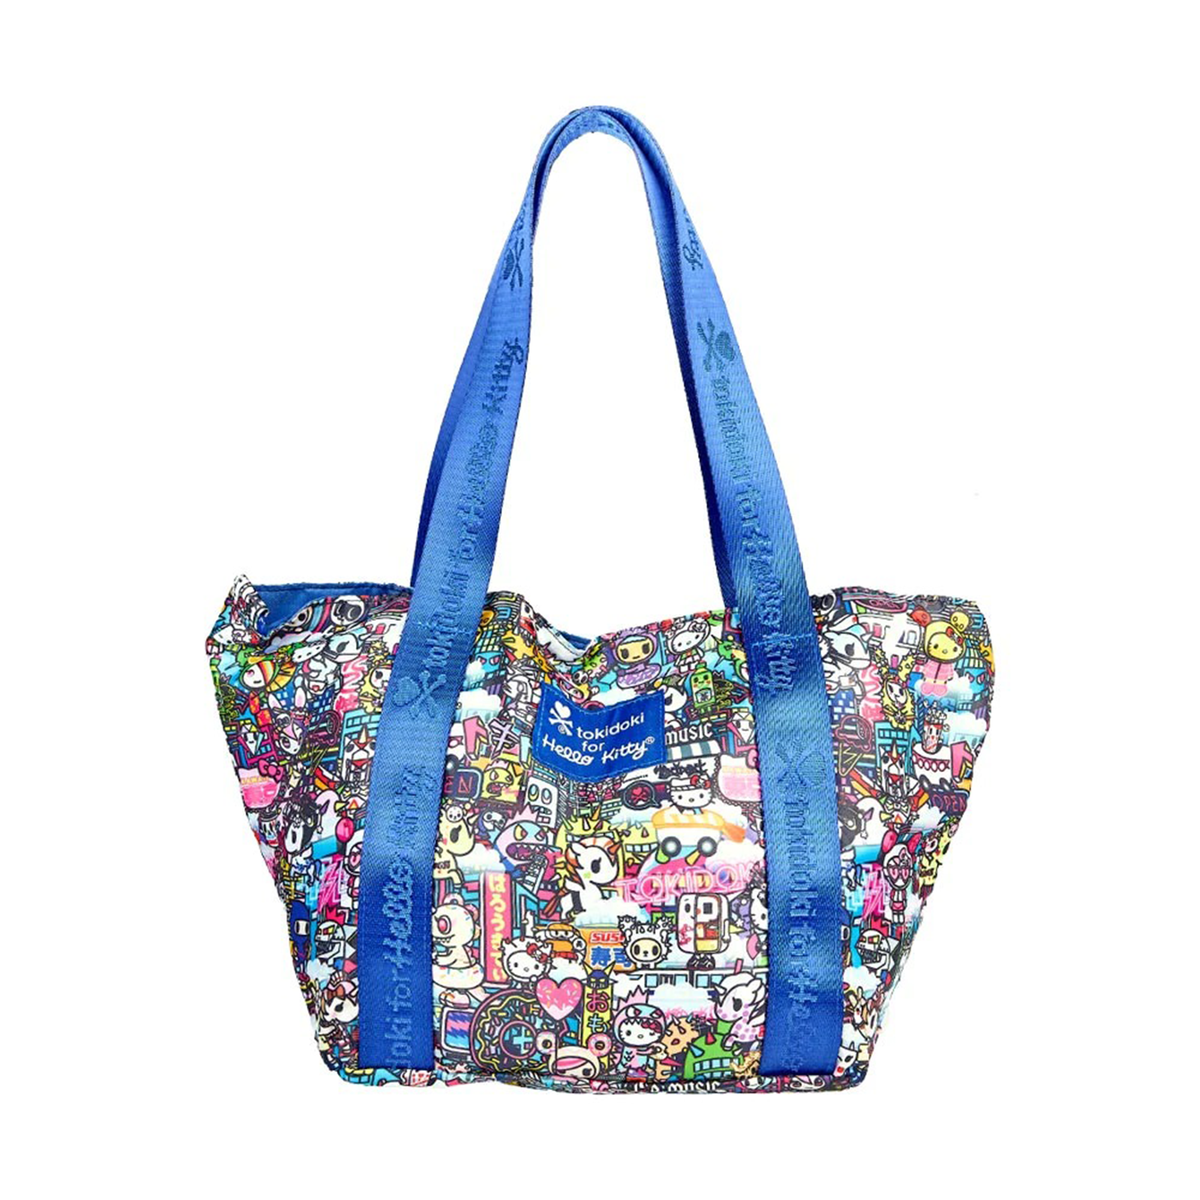 Hello Kitty Purse - Women's handbags